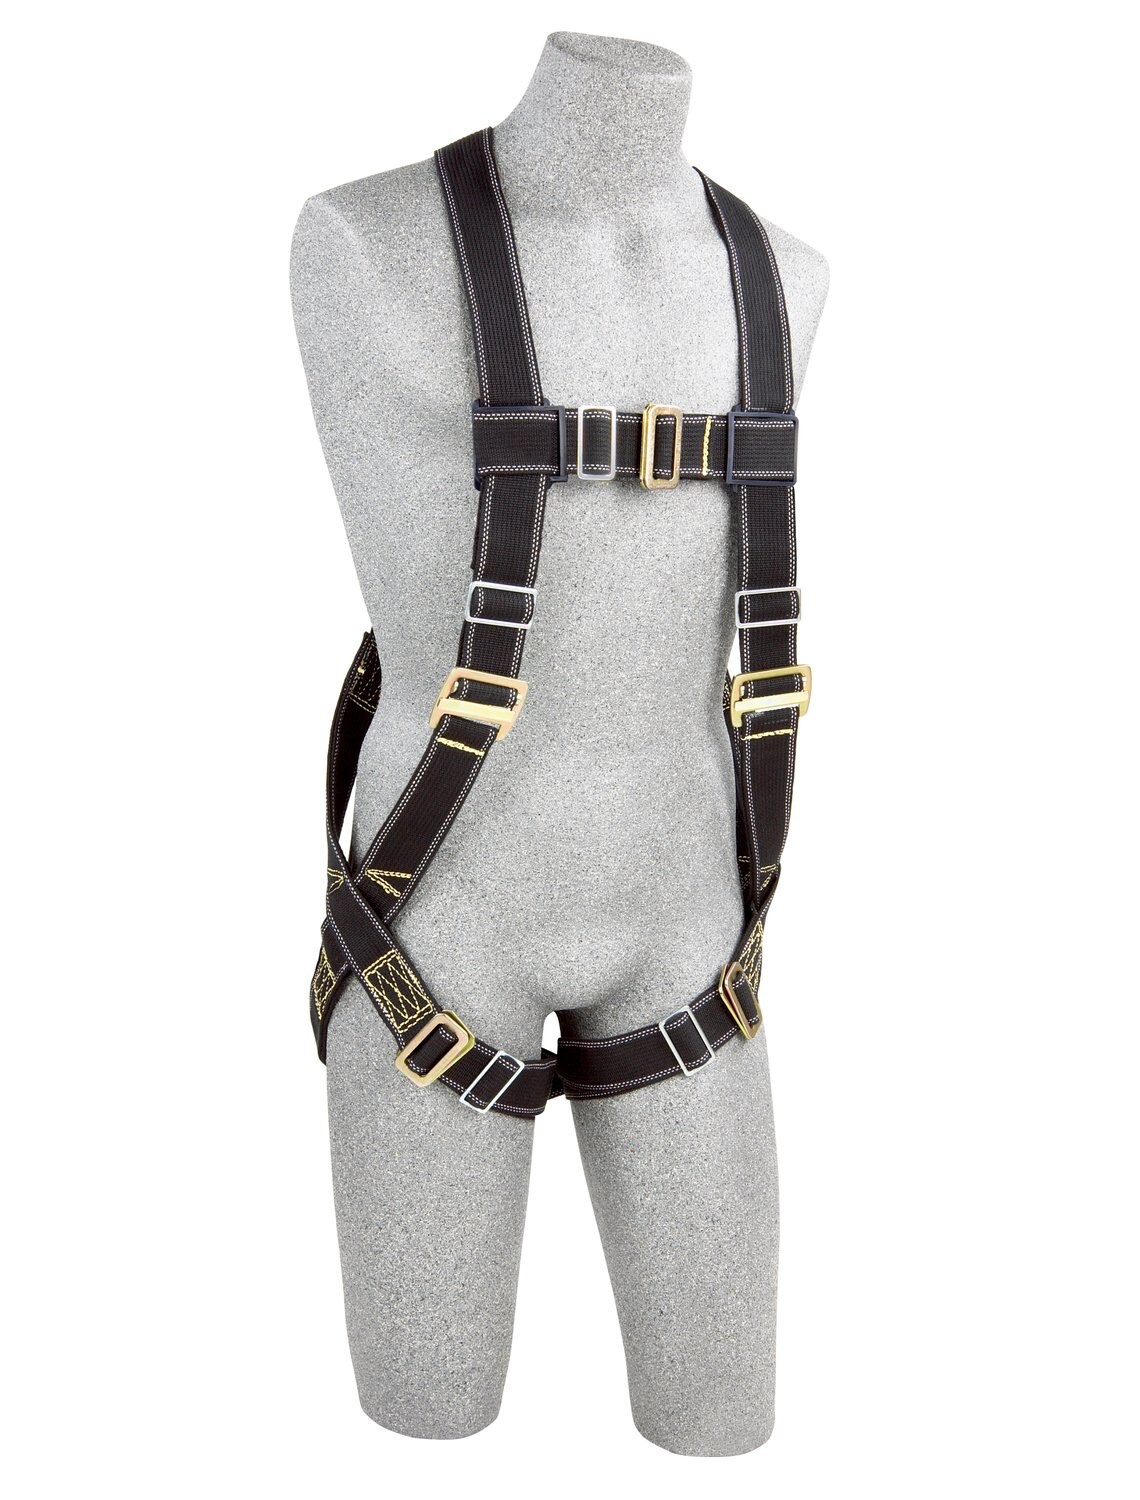 7012815476 - 3M DBI-SALA Delta Hot Work Vest Safety Harness 1104628, X-Large